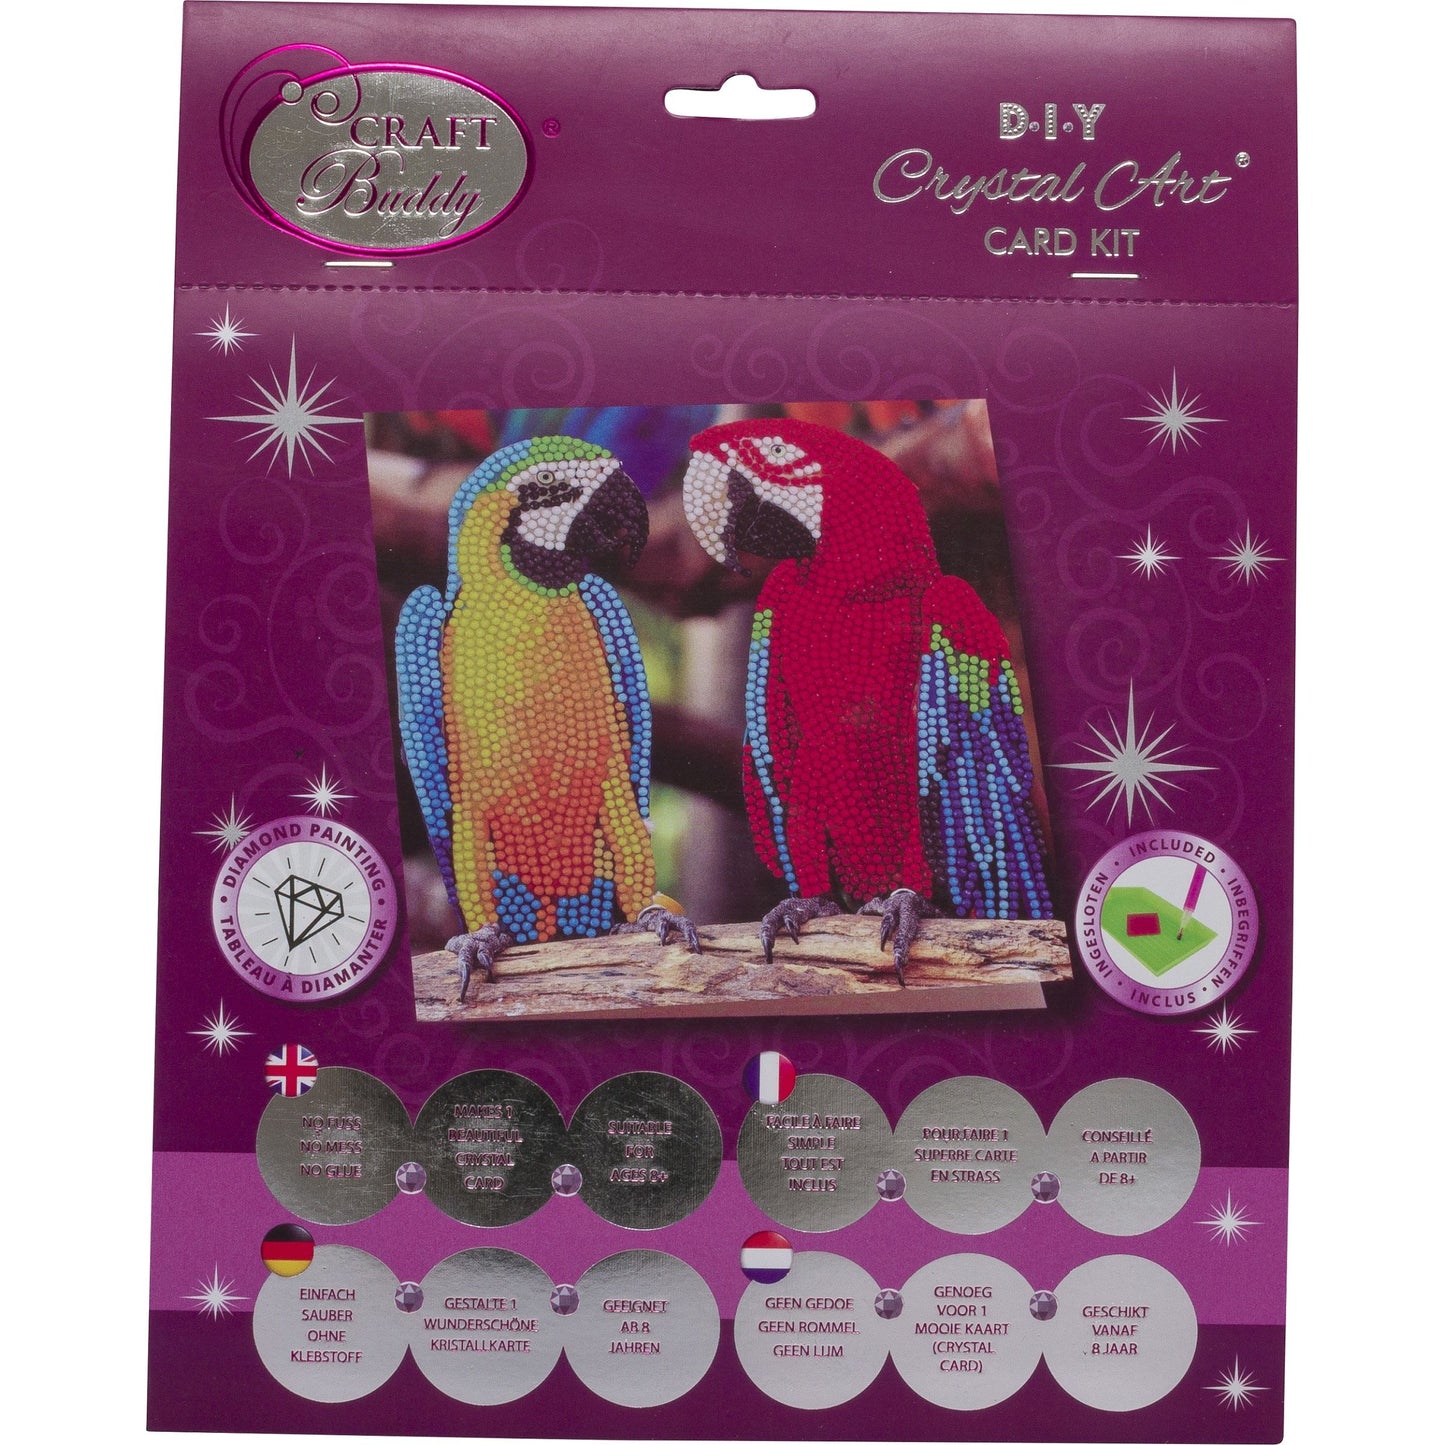 Craft Buddy 18x18cm DIY Crystal Card Kit - Parrot Friends